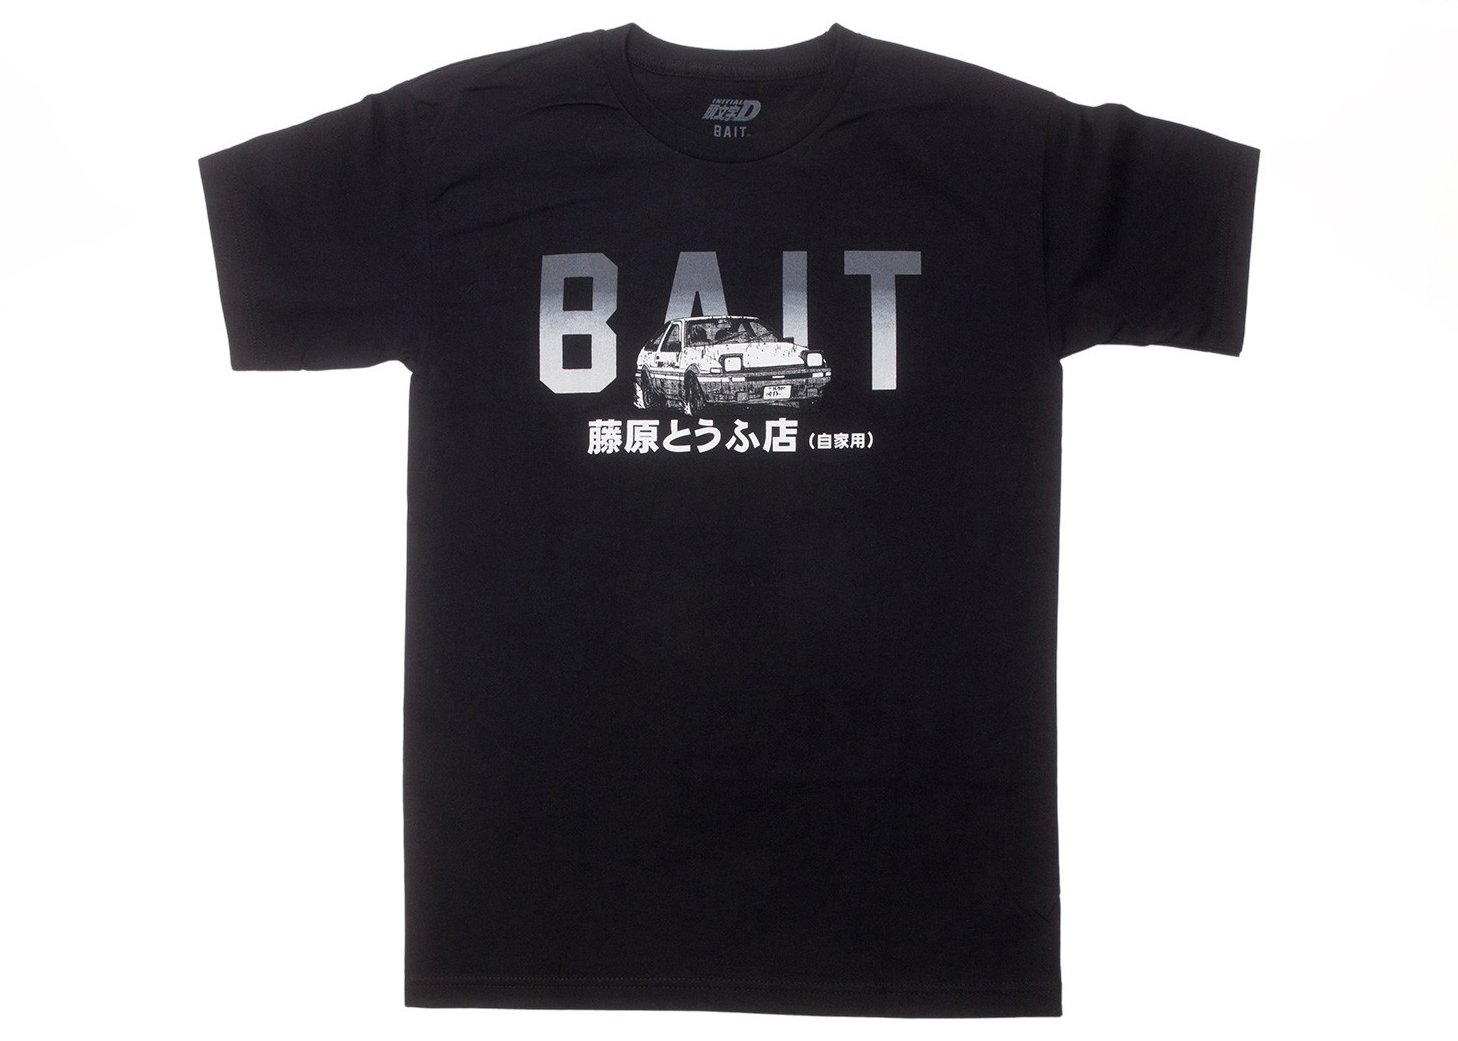 BAIT x Initial D Bait Logo Design Tee Black